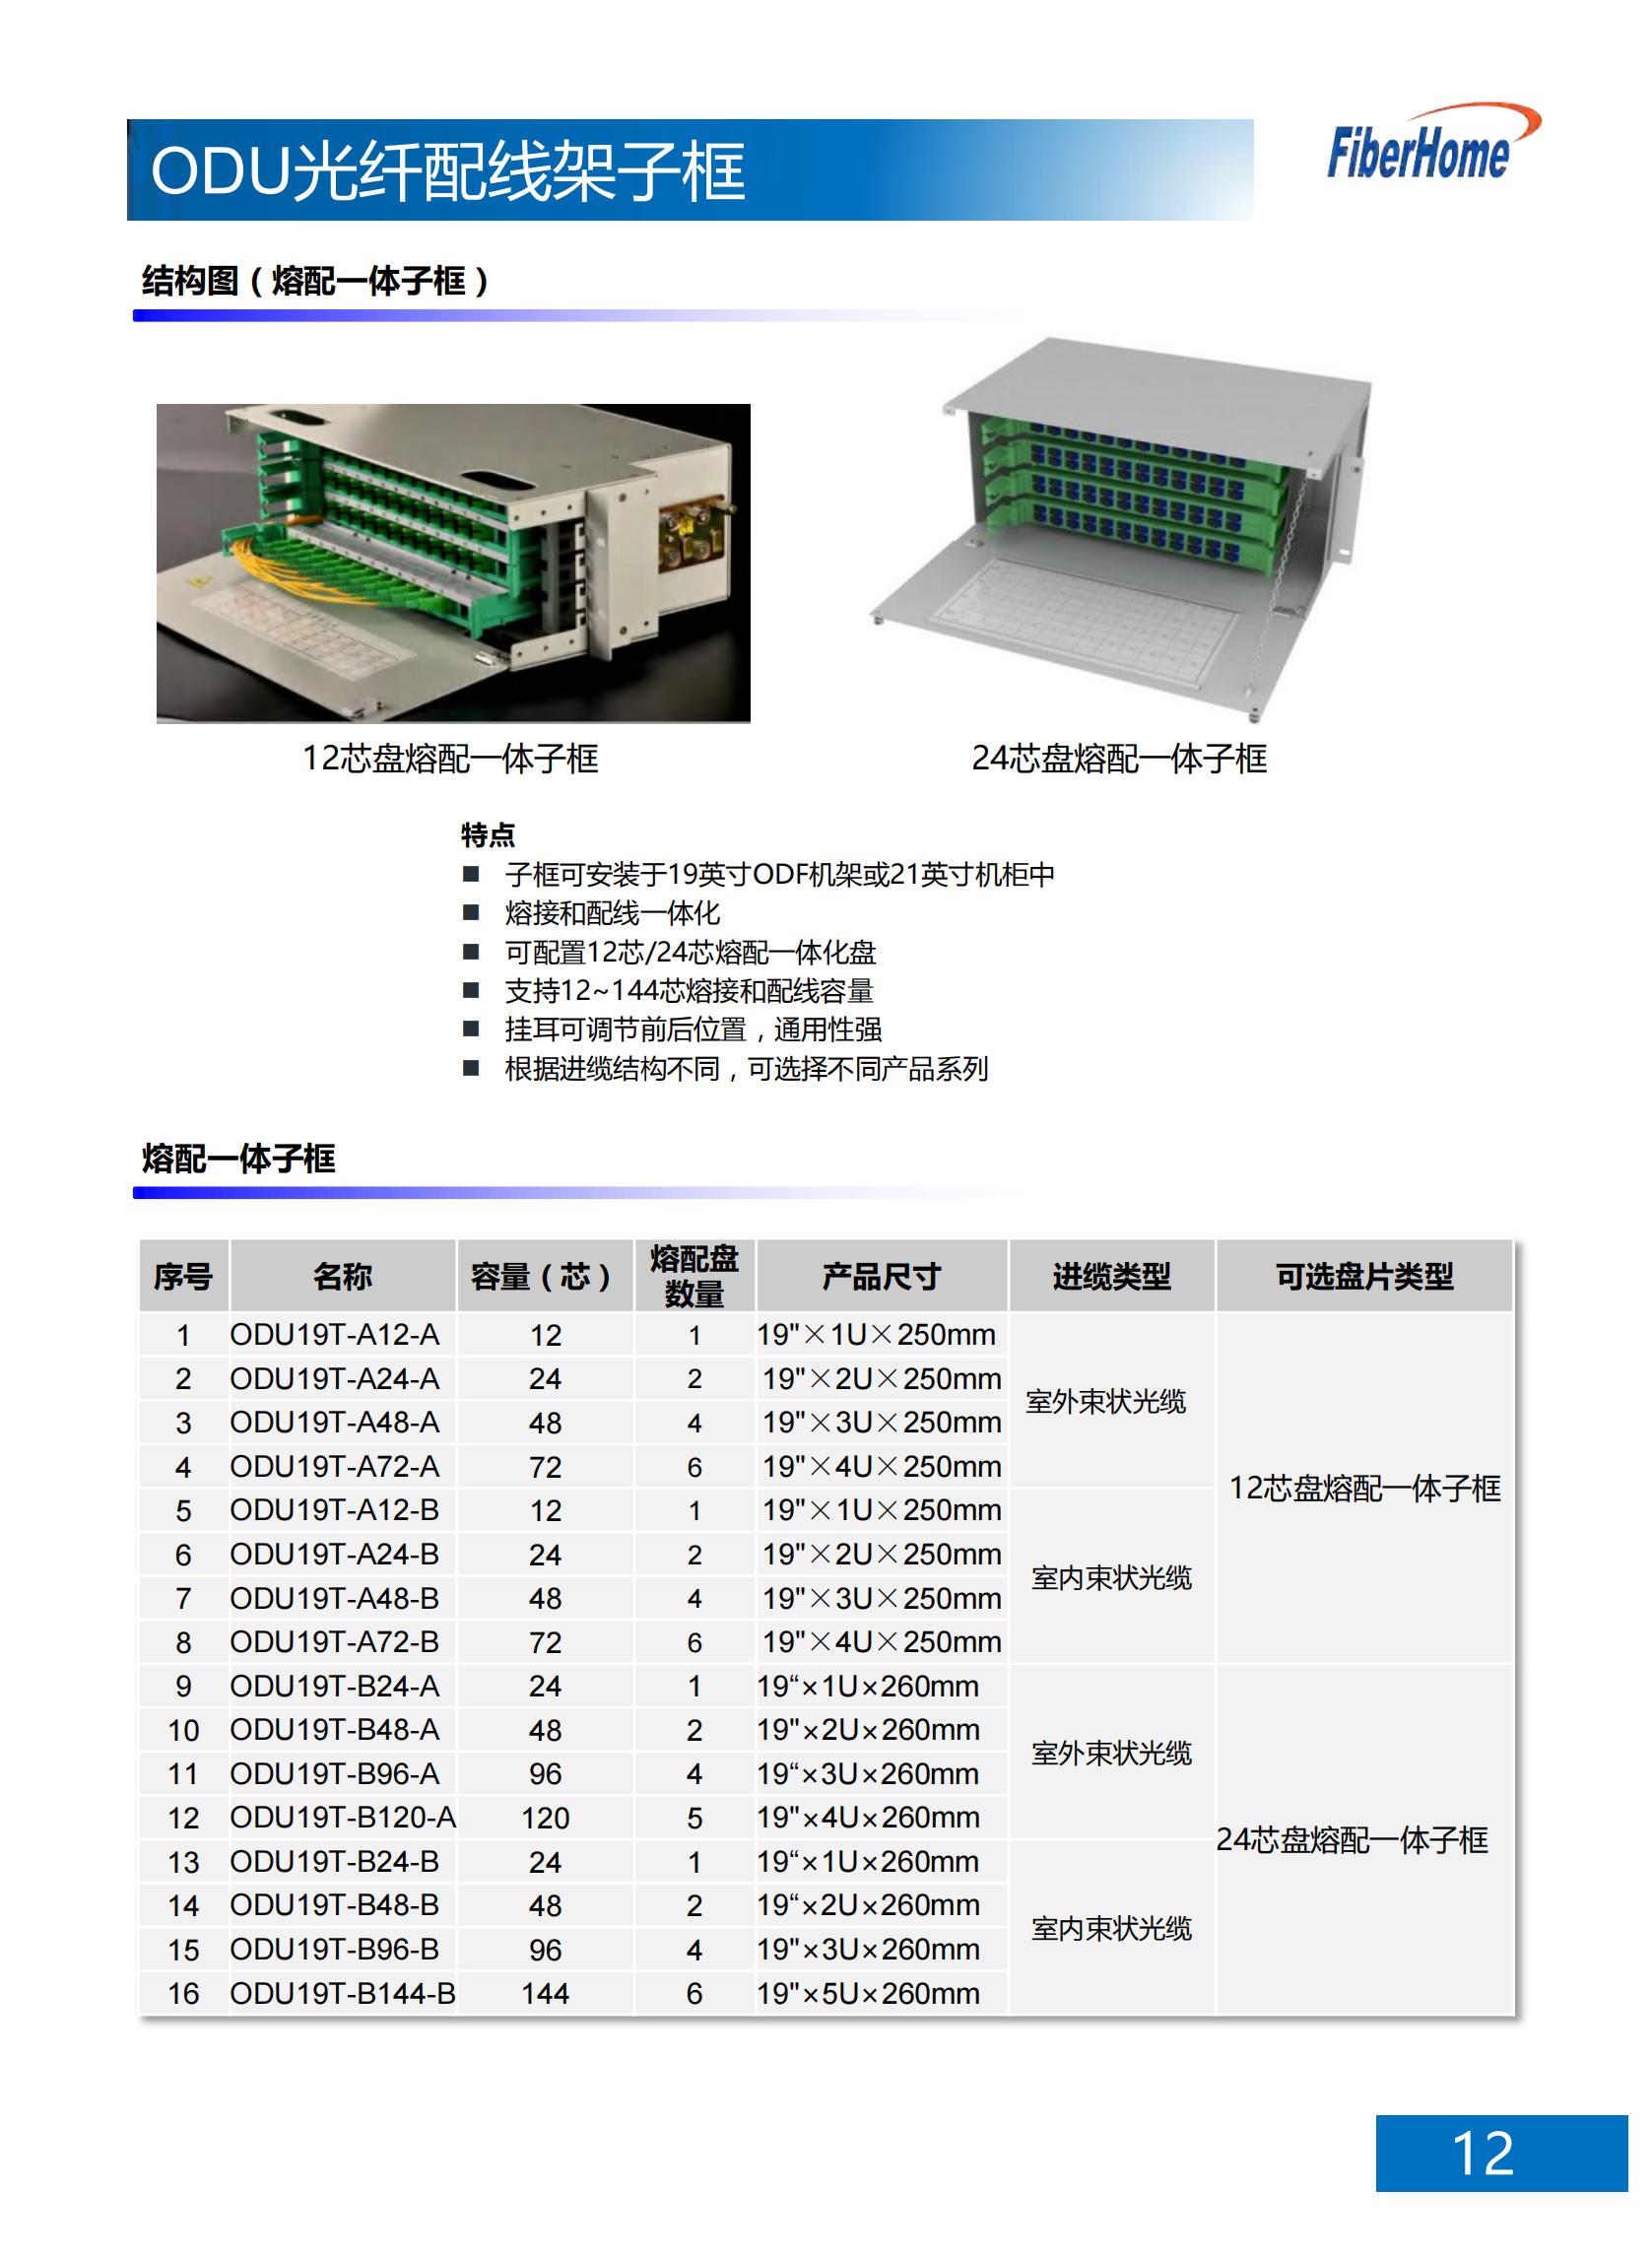 72-core ODU optical fiber distribution shelf frame ODU19T-A1272-B-FC (including 12-core FC fusion integration unit*6)